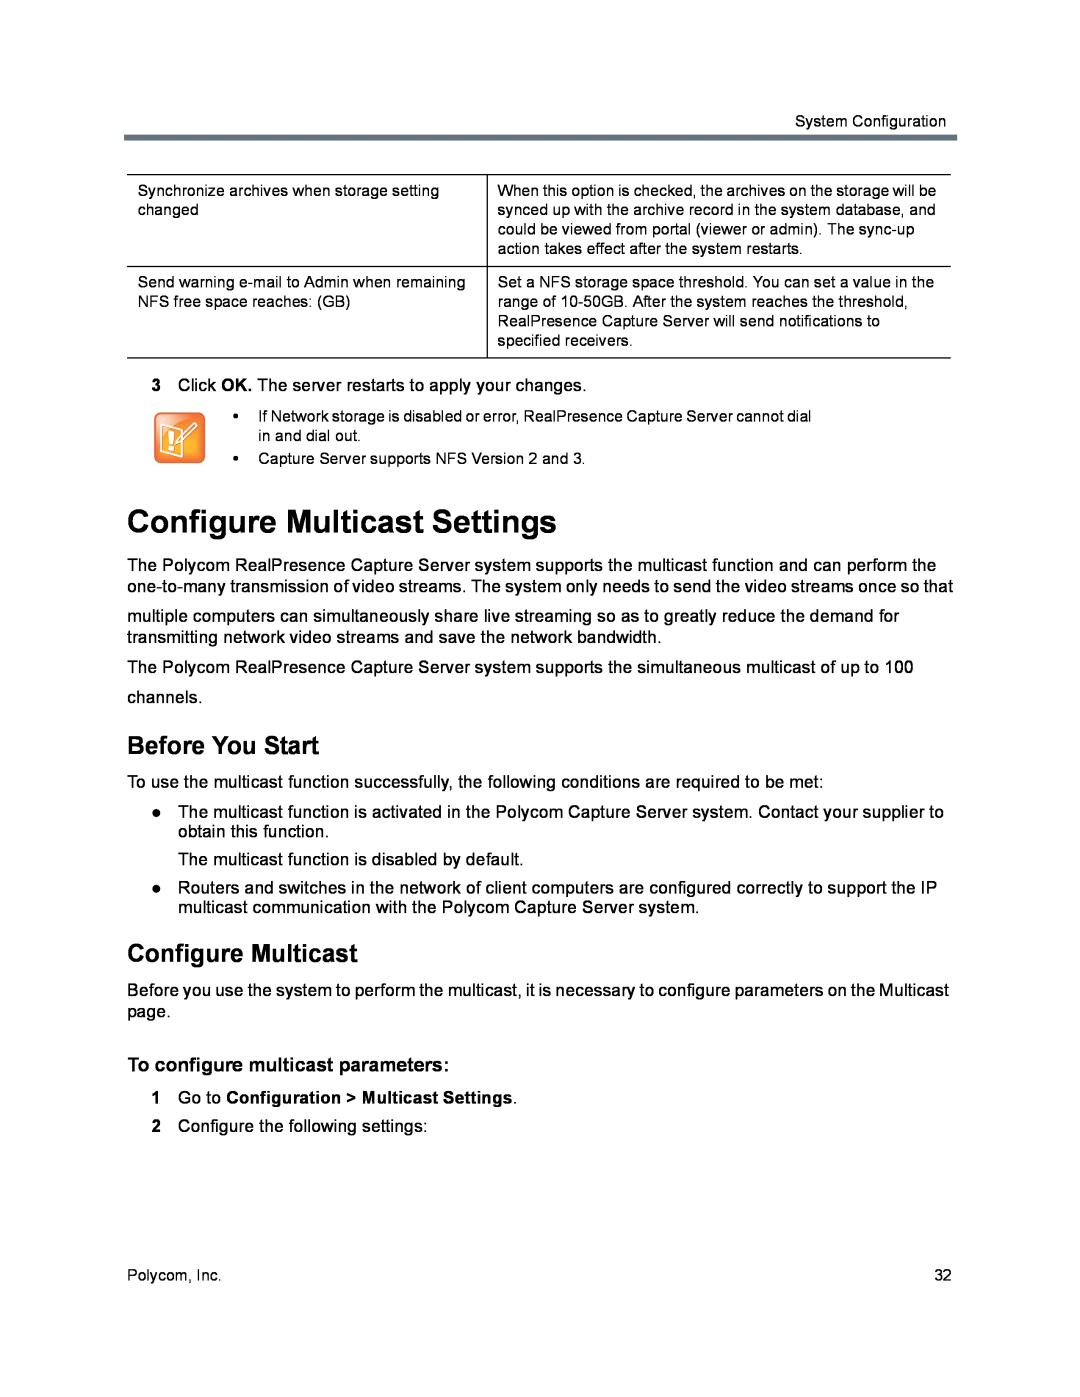 Polycom 40/0 manual Configure Multicast Settings, Before You Start, To configure multicast parameters 